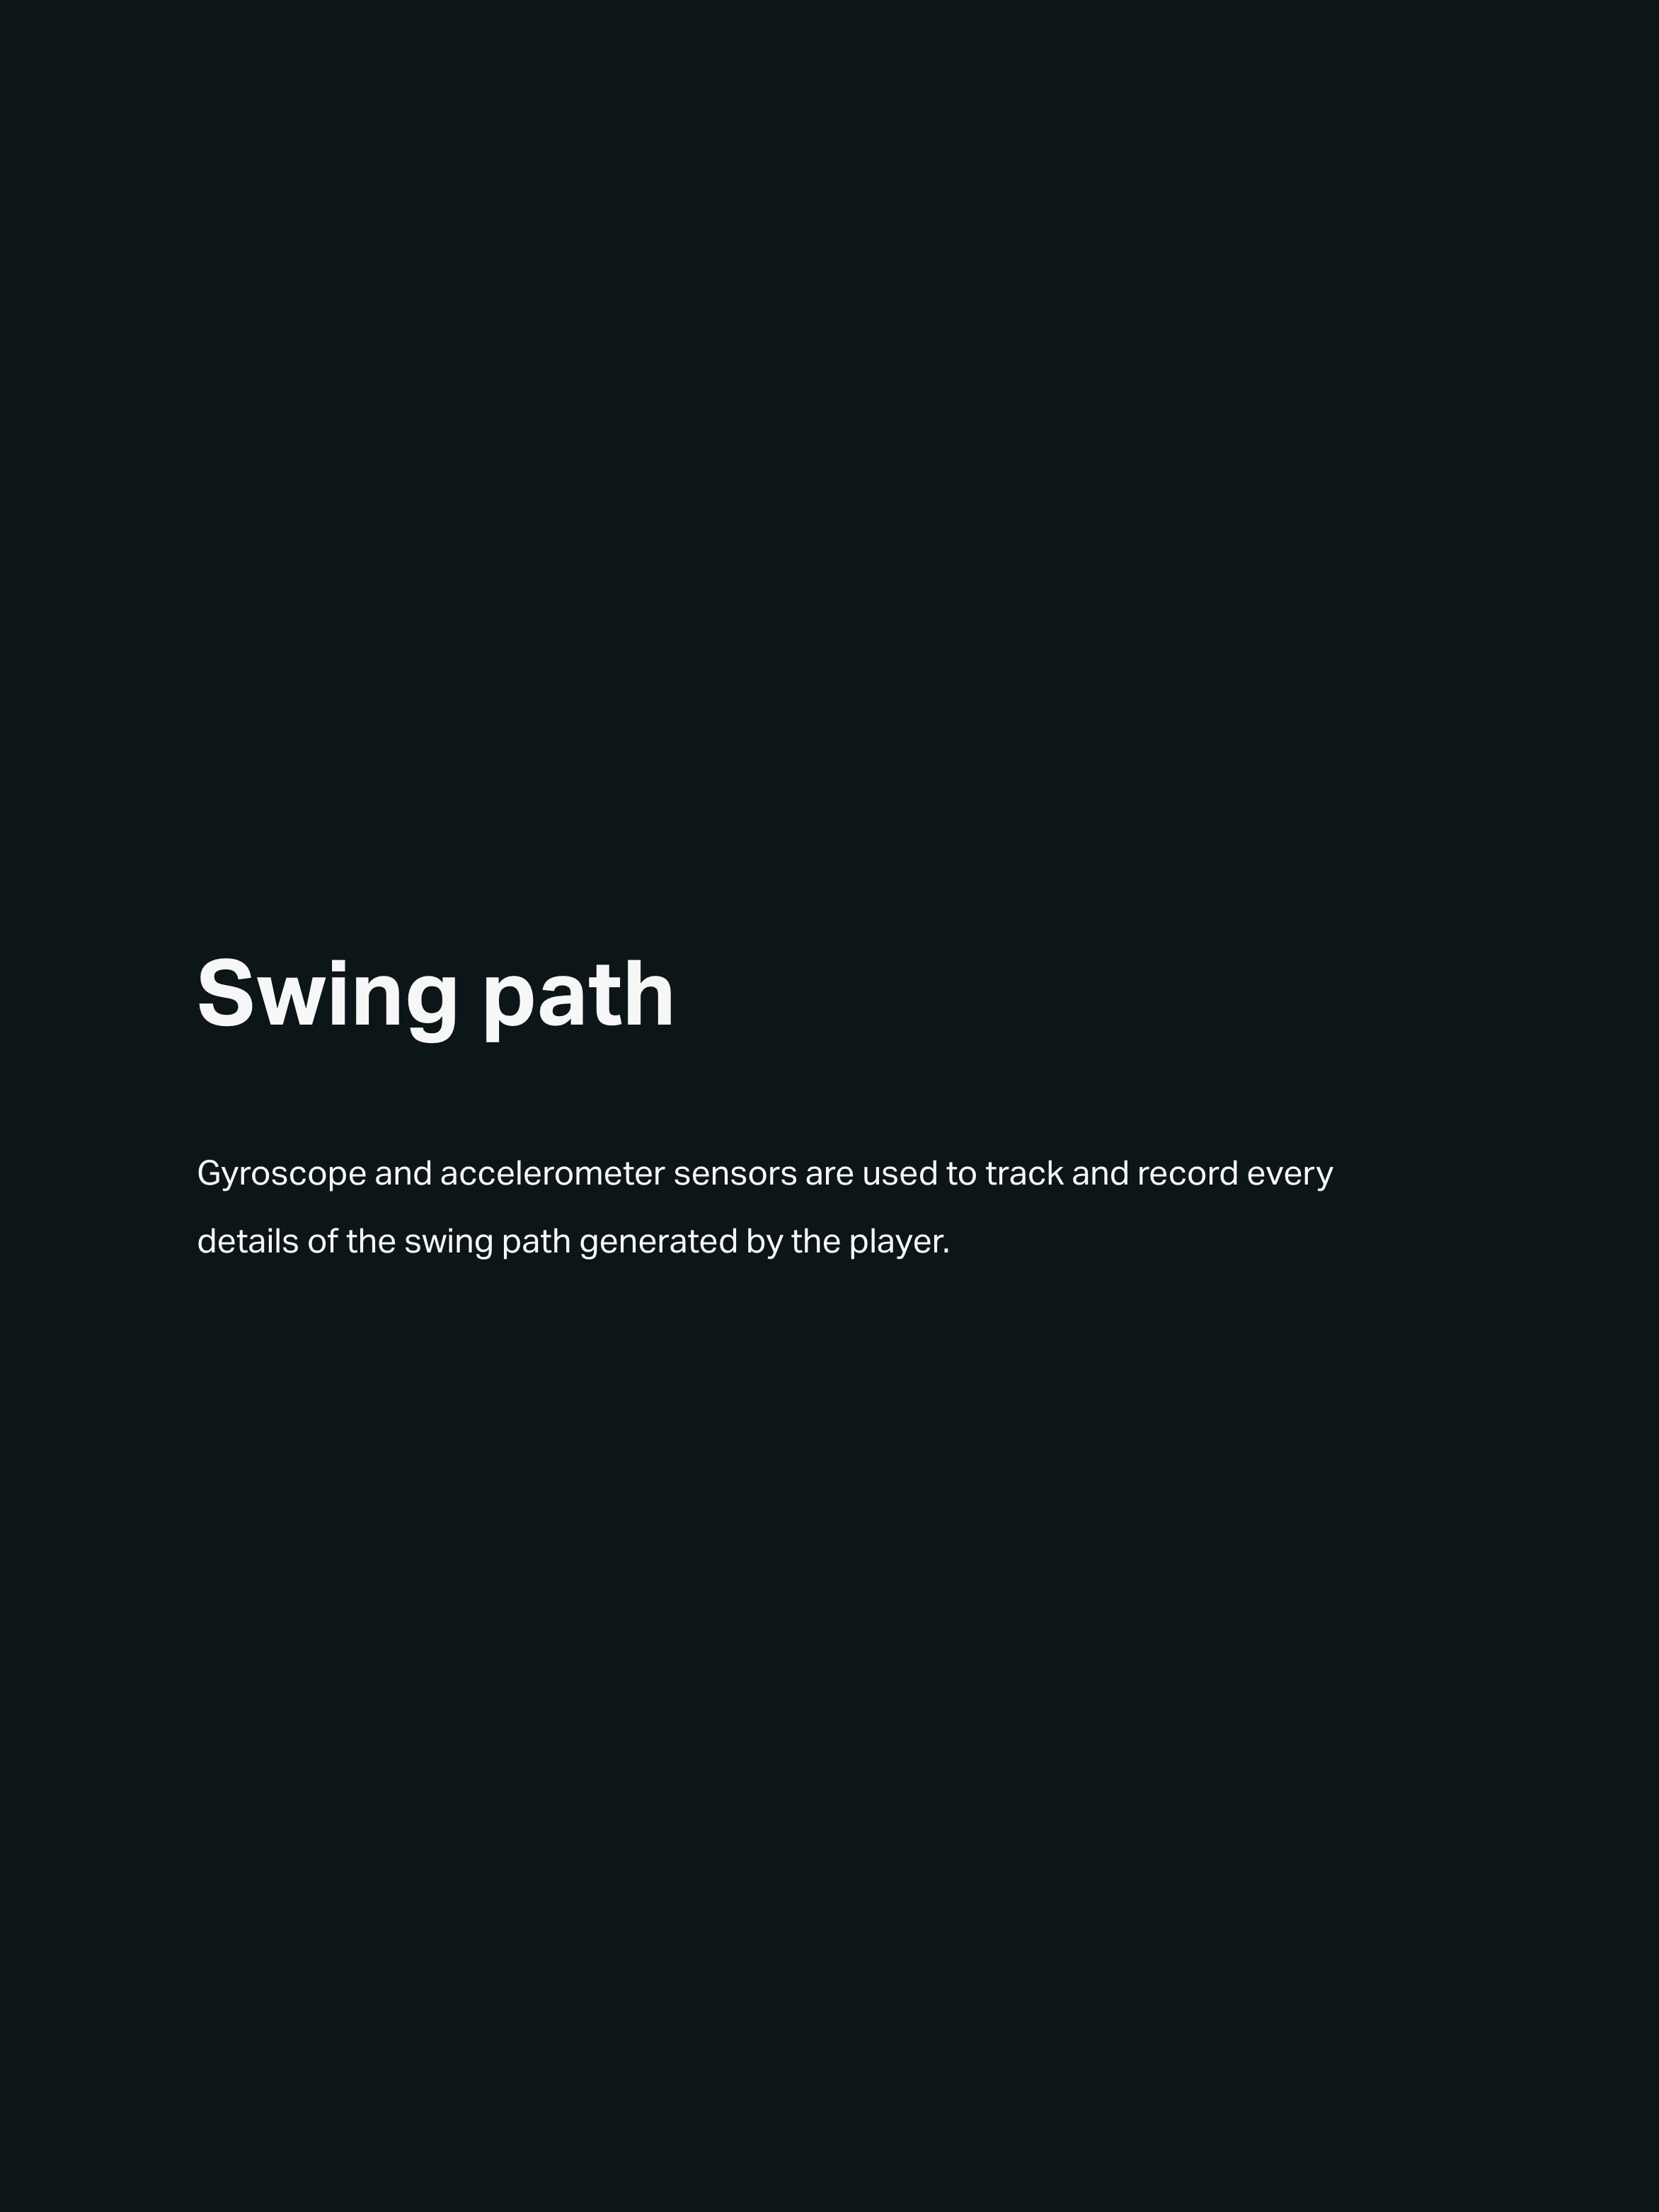 Swing path left@2x